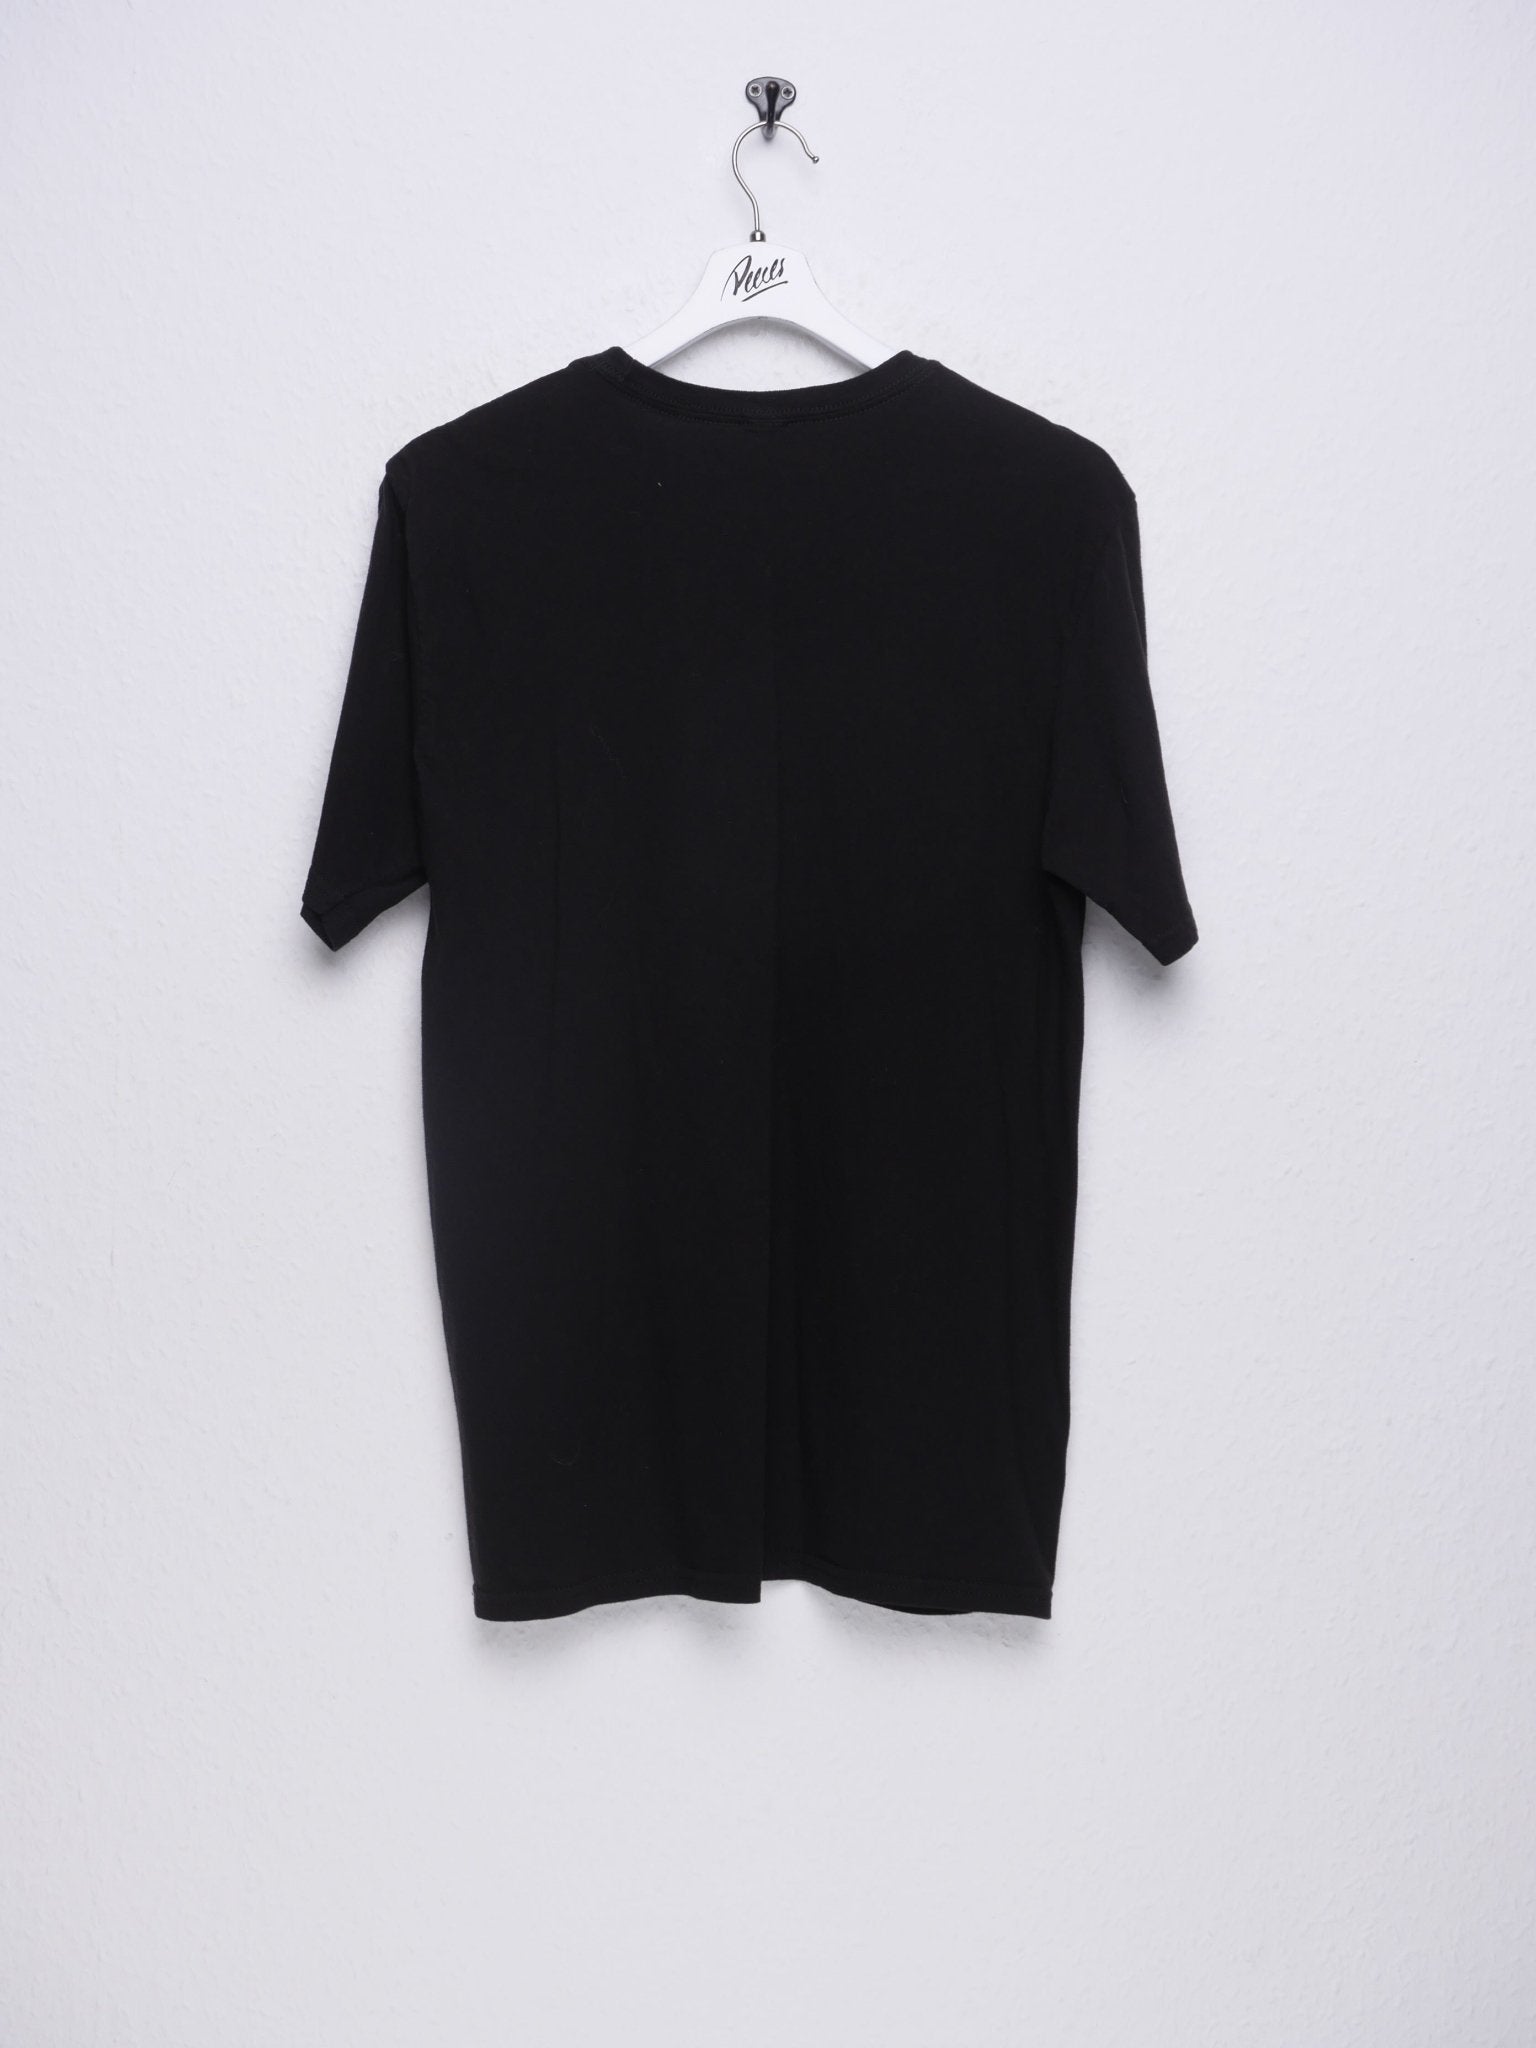 Caturn printed Graphic black Shirt - Peeces